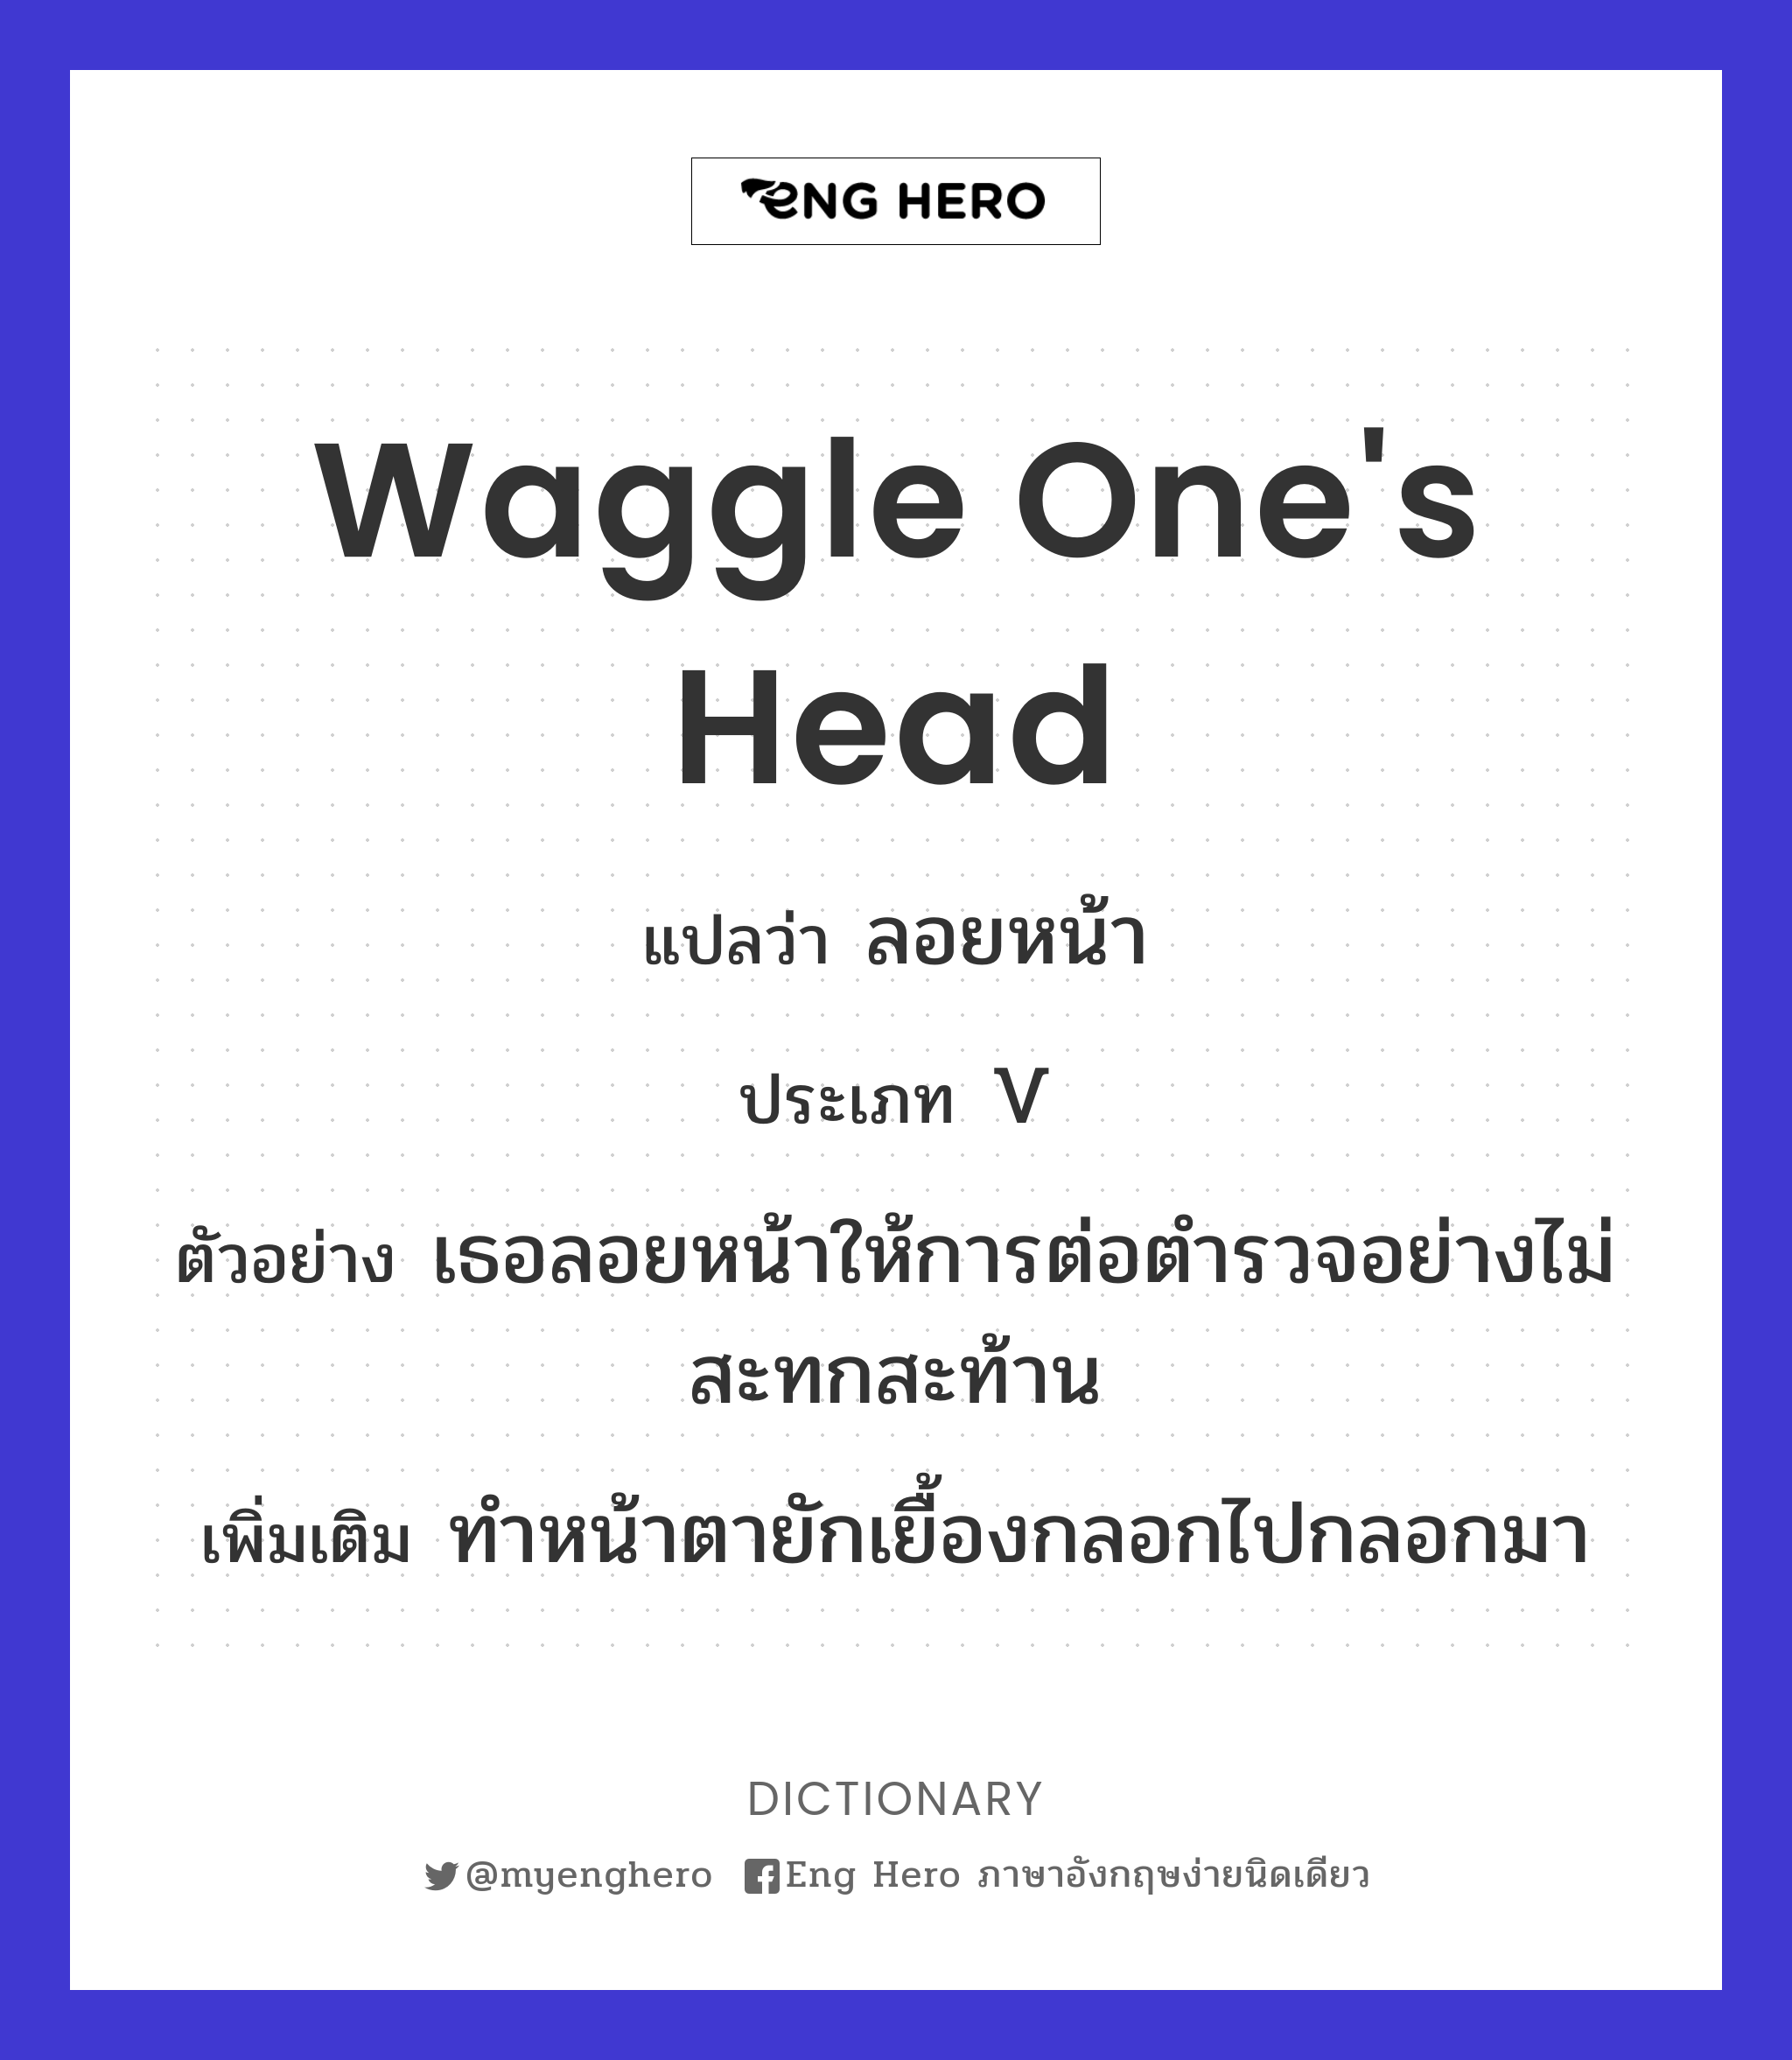 waggle one's head